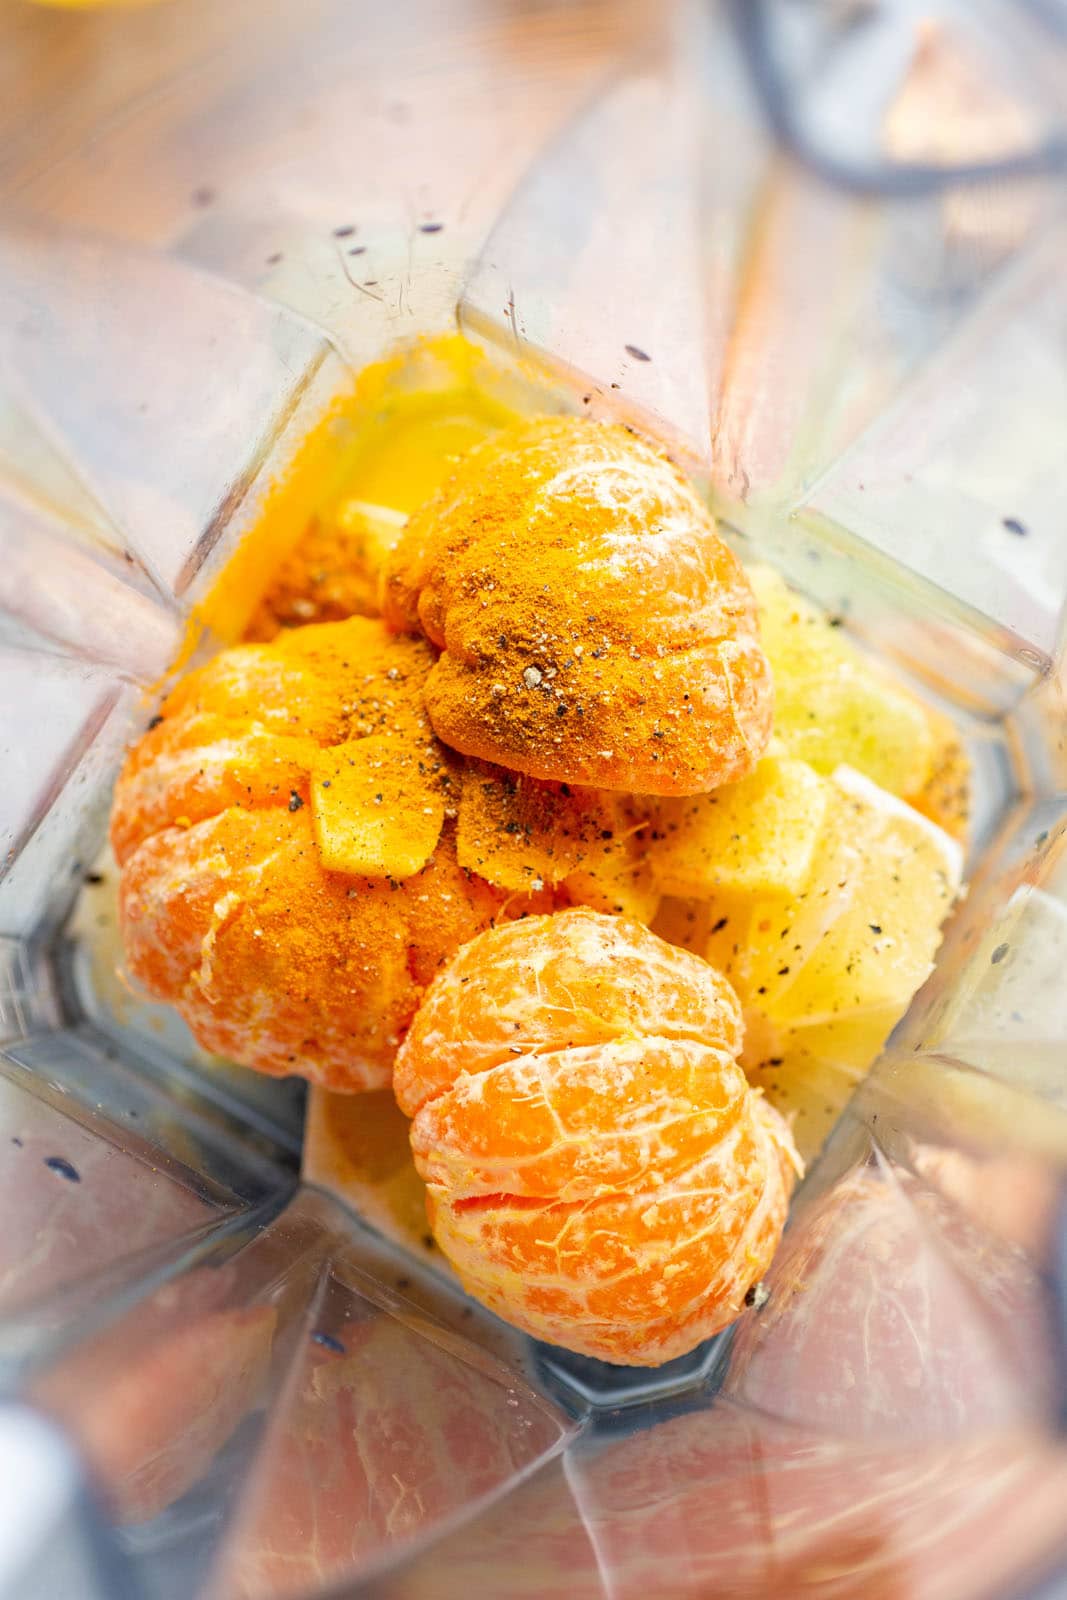 Blended Vitamin C Citrus Juice Story - nyssa's kitchen